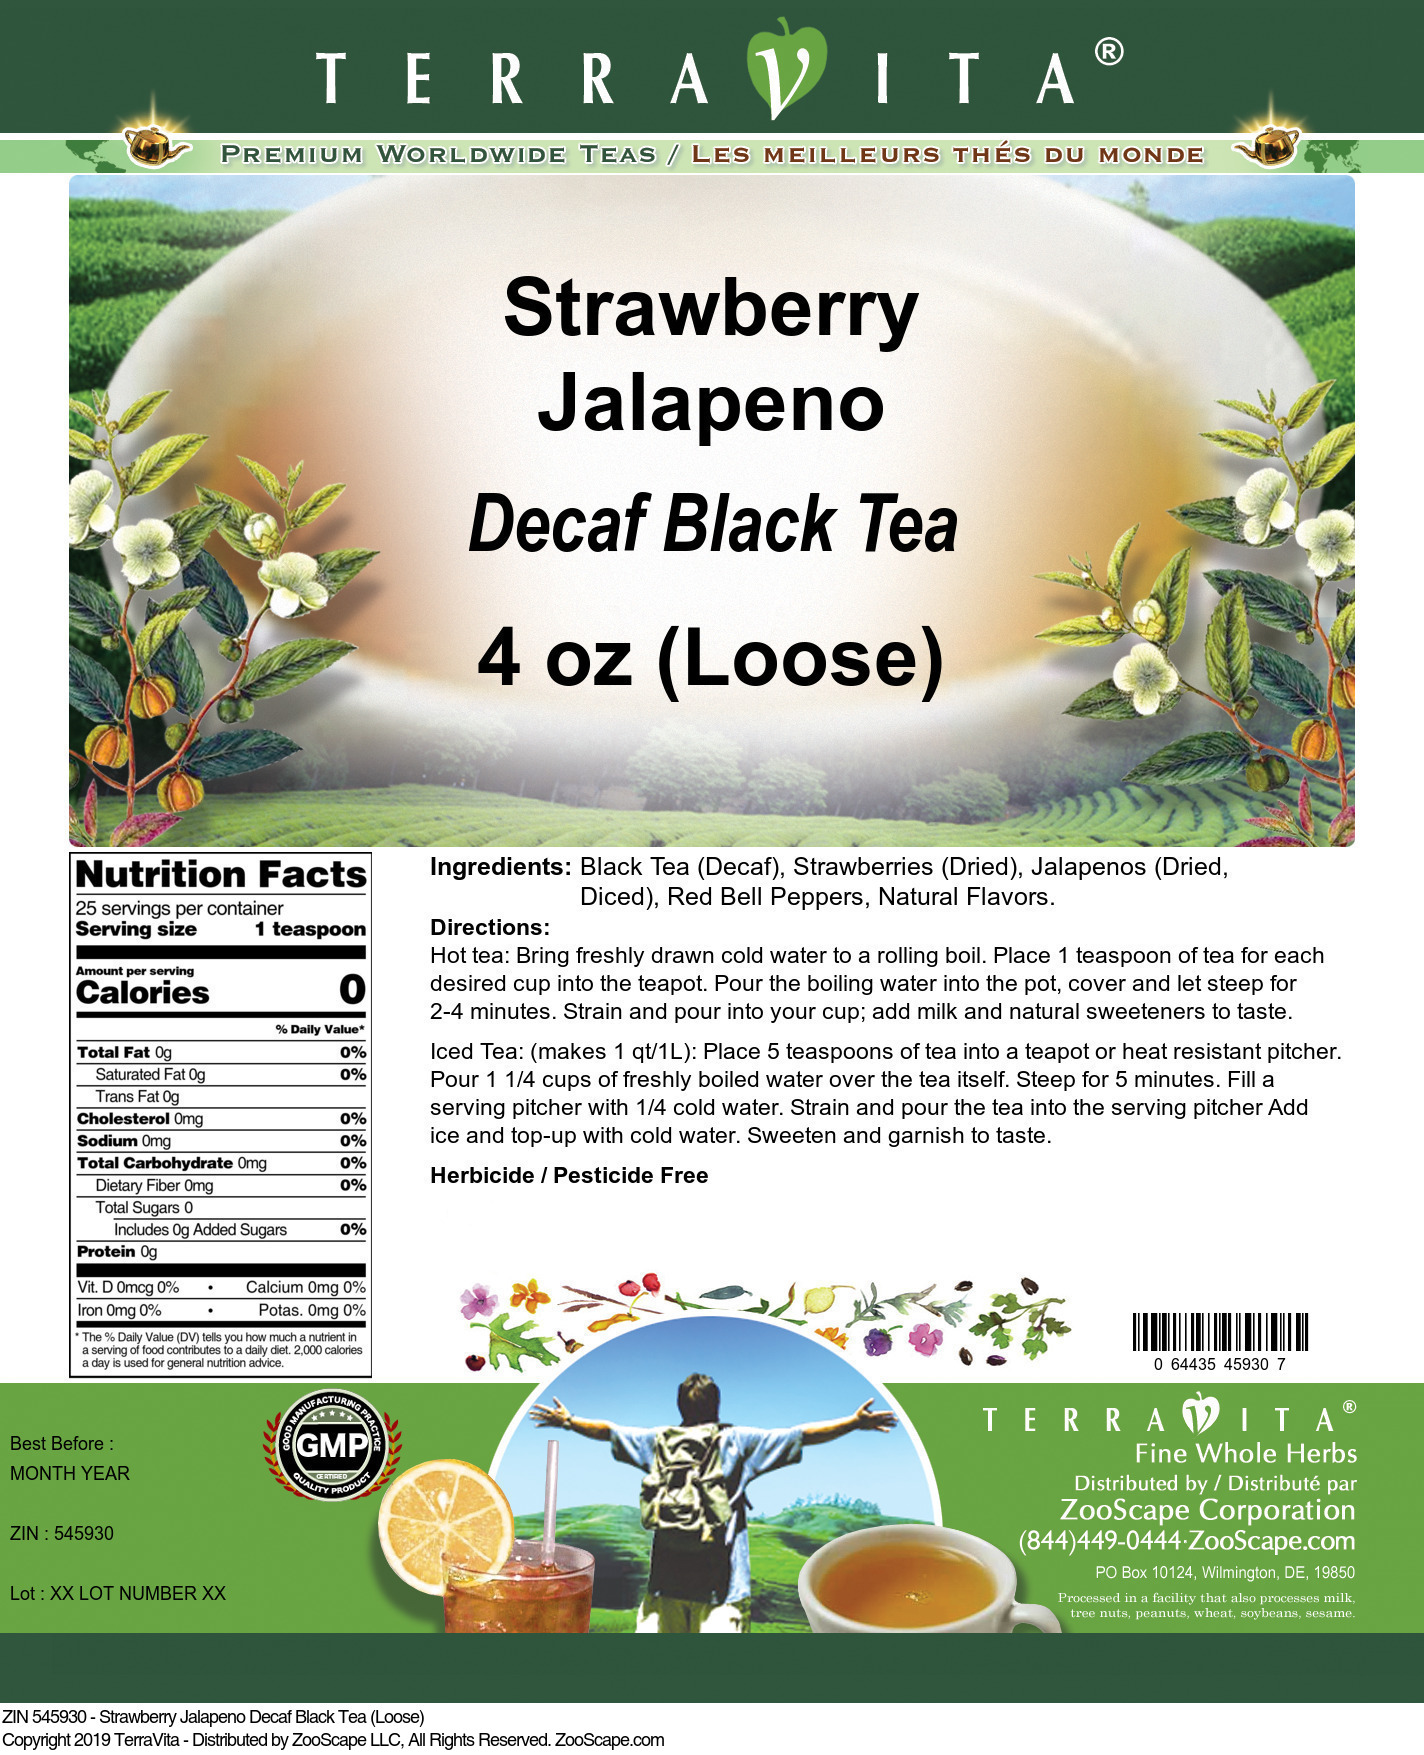 Strawberry Jalapeno Decaf Black Tea (Loose) - Label